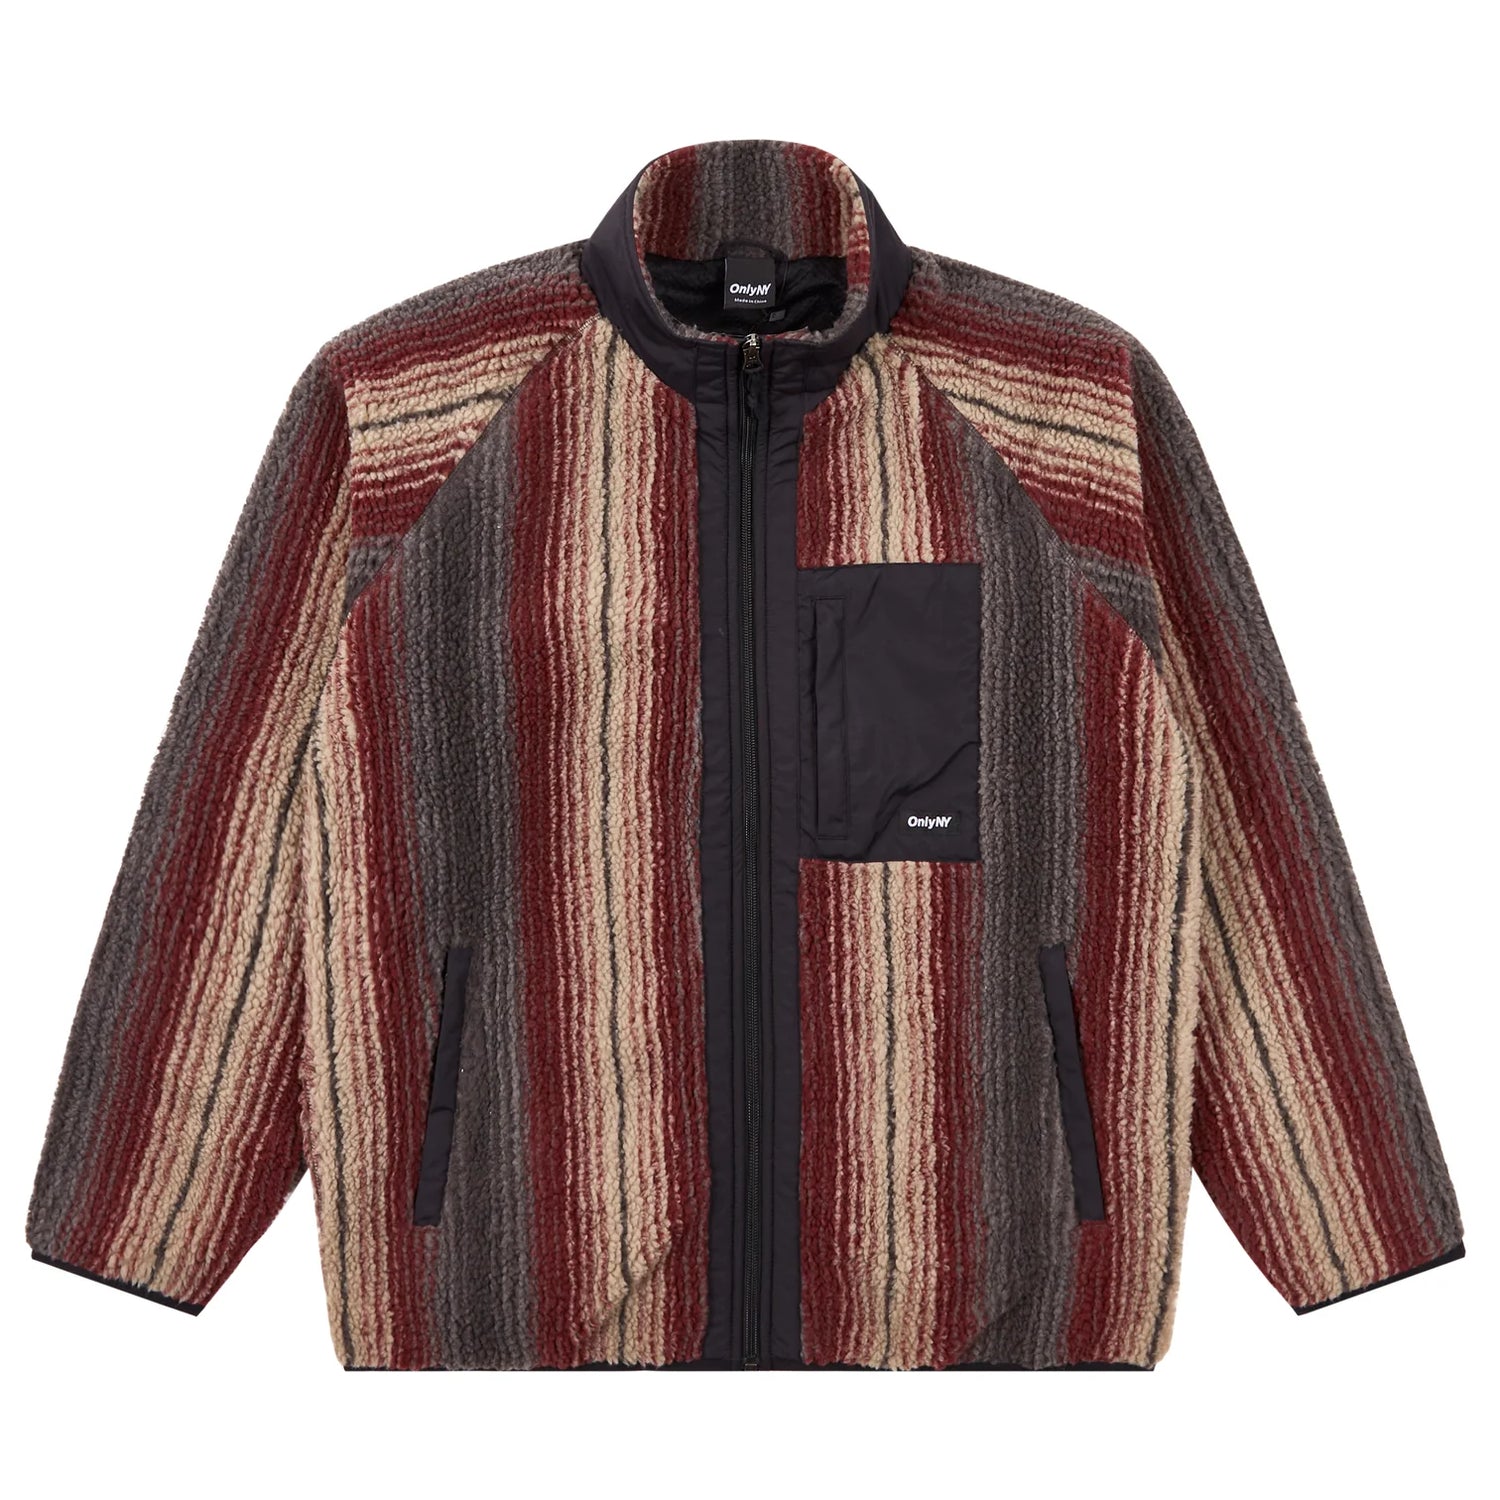 Only NY Radiant Stripe Fleece Jacket - Maroon Multi